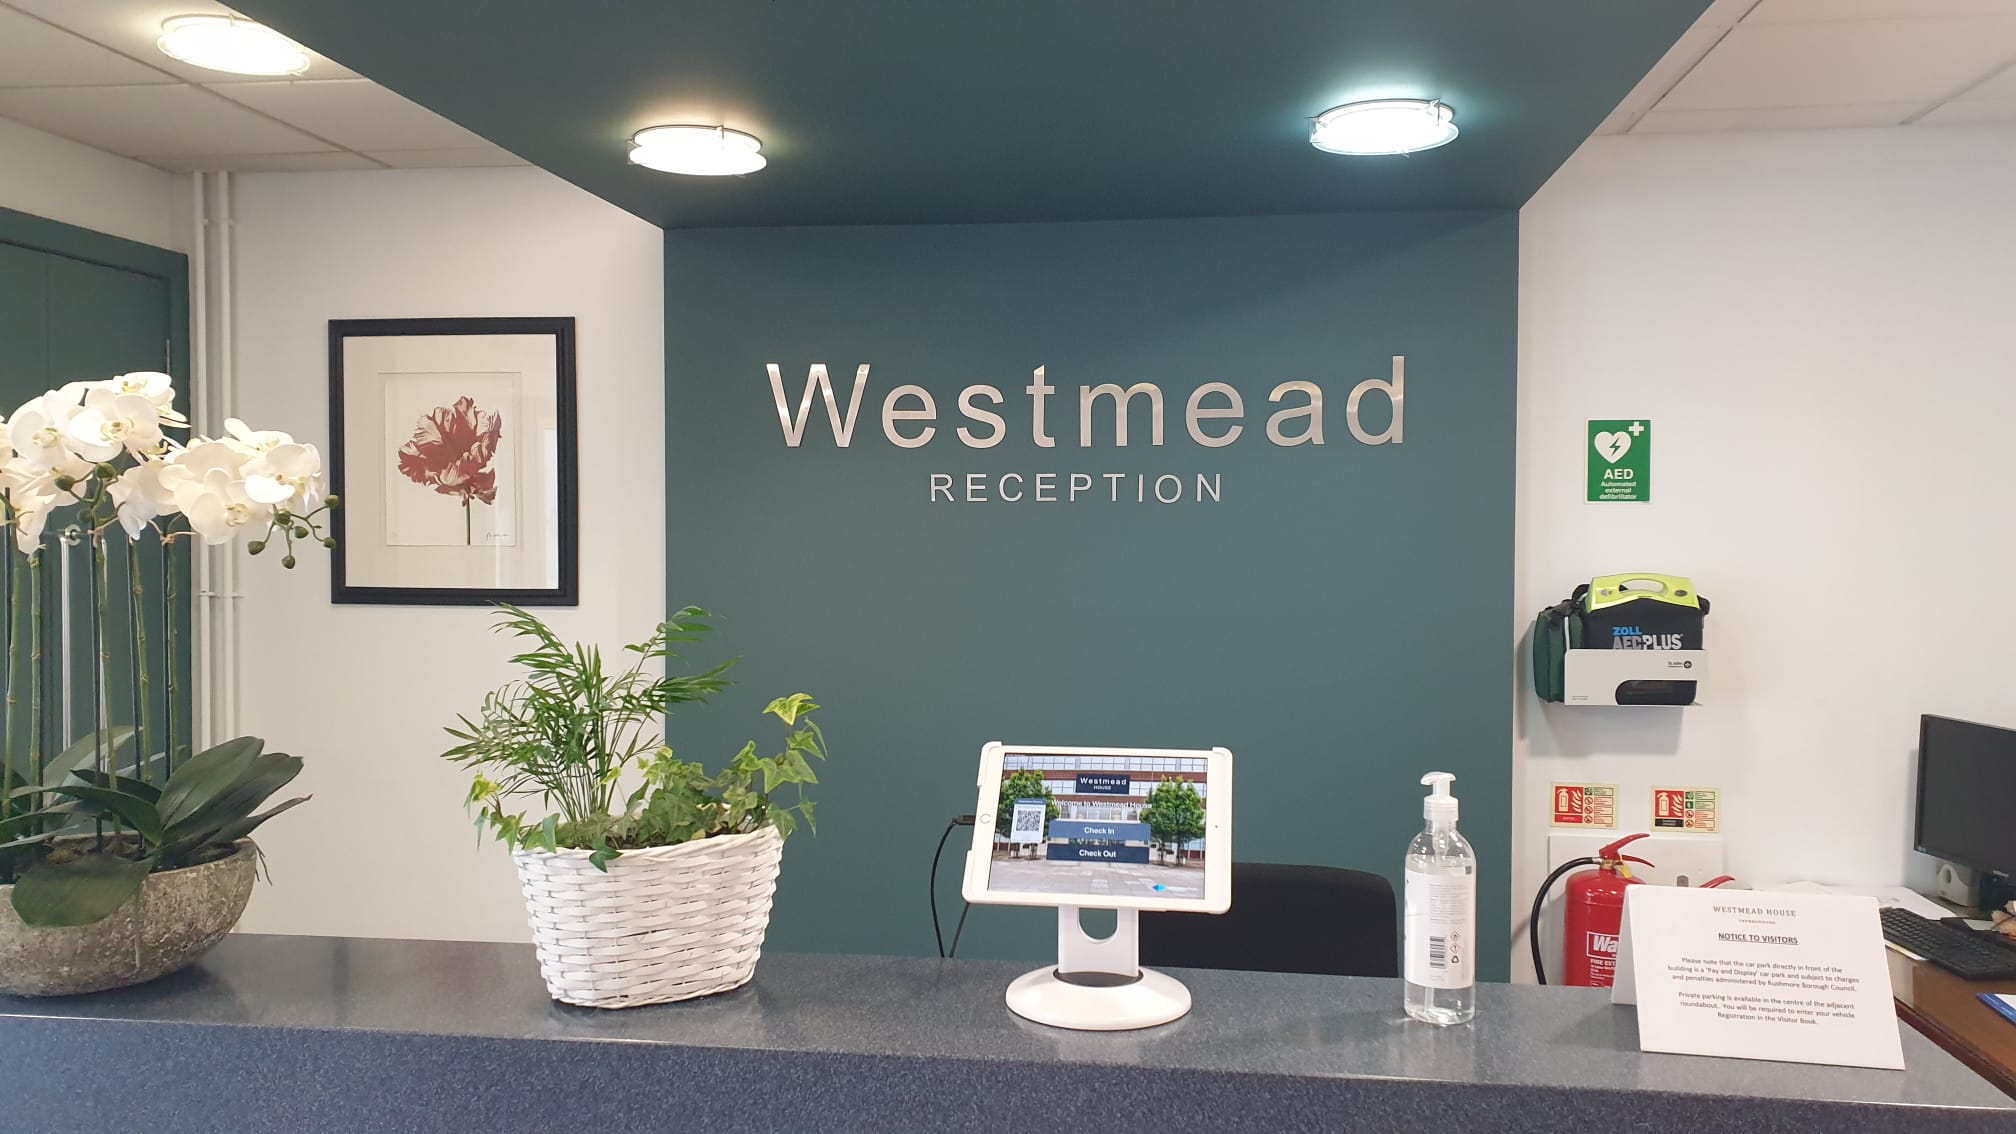 Westmead reception desk